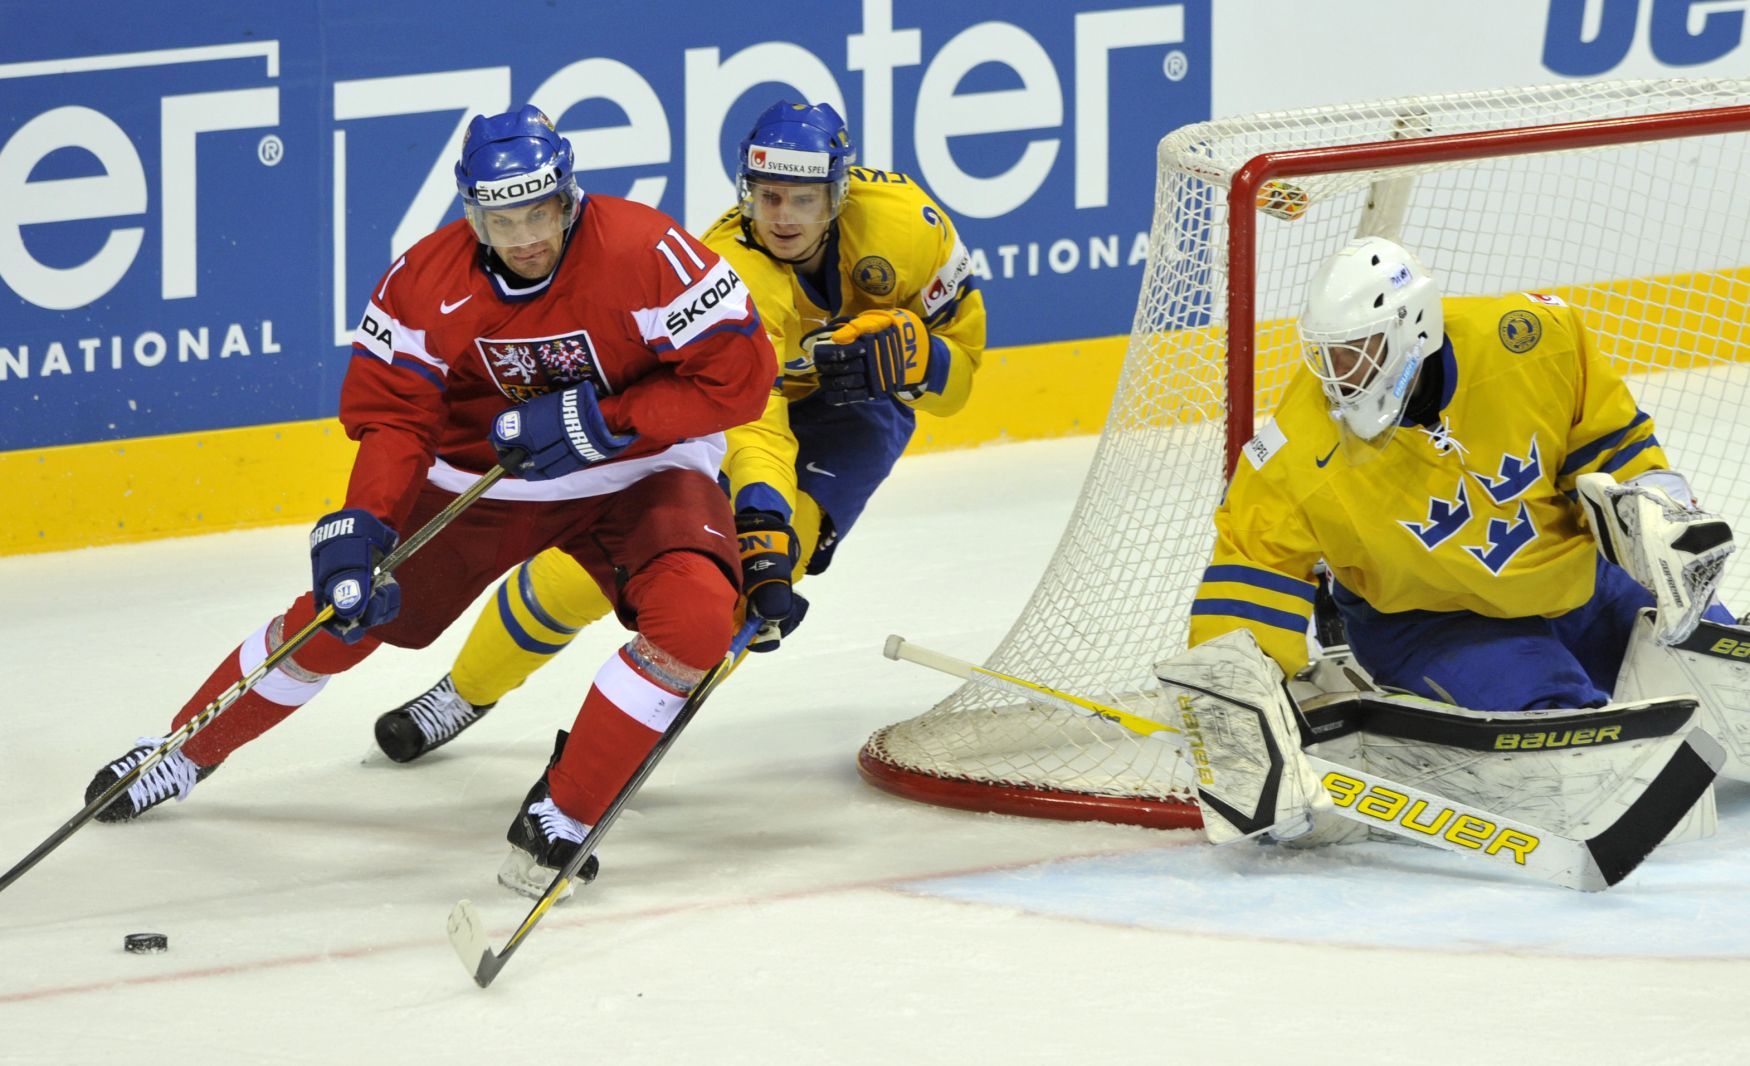 Semifinále MS 2011 v hokeji v Bratislavě, Česko - Švédsko: Petr Hubáček, Oliver Ekman-Larsson a brankář Viktor Fasth